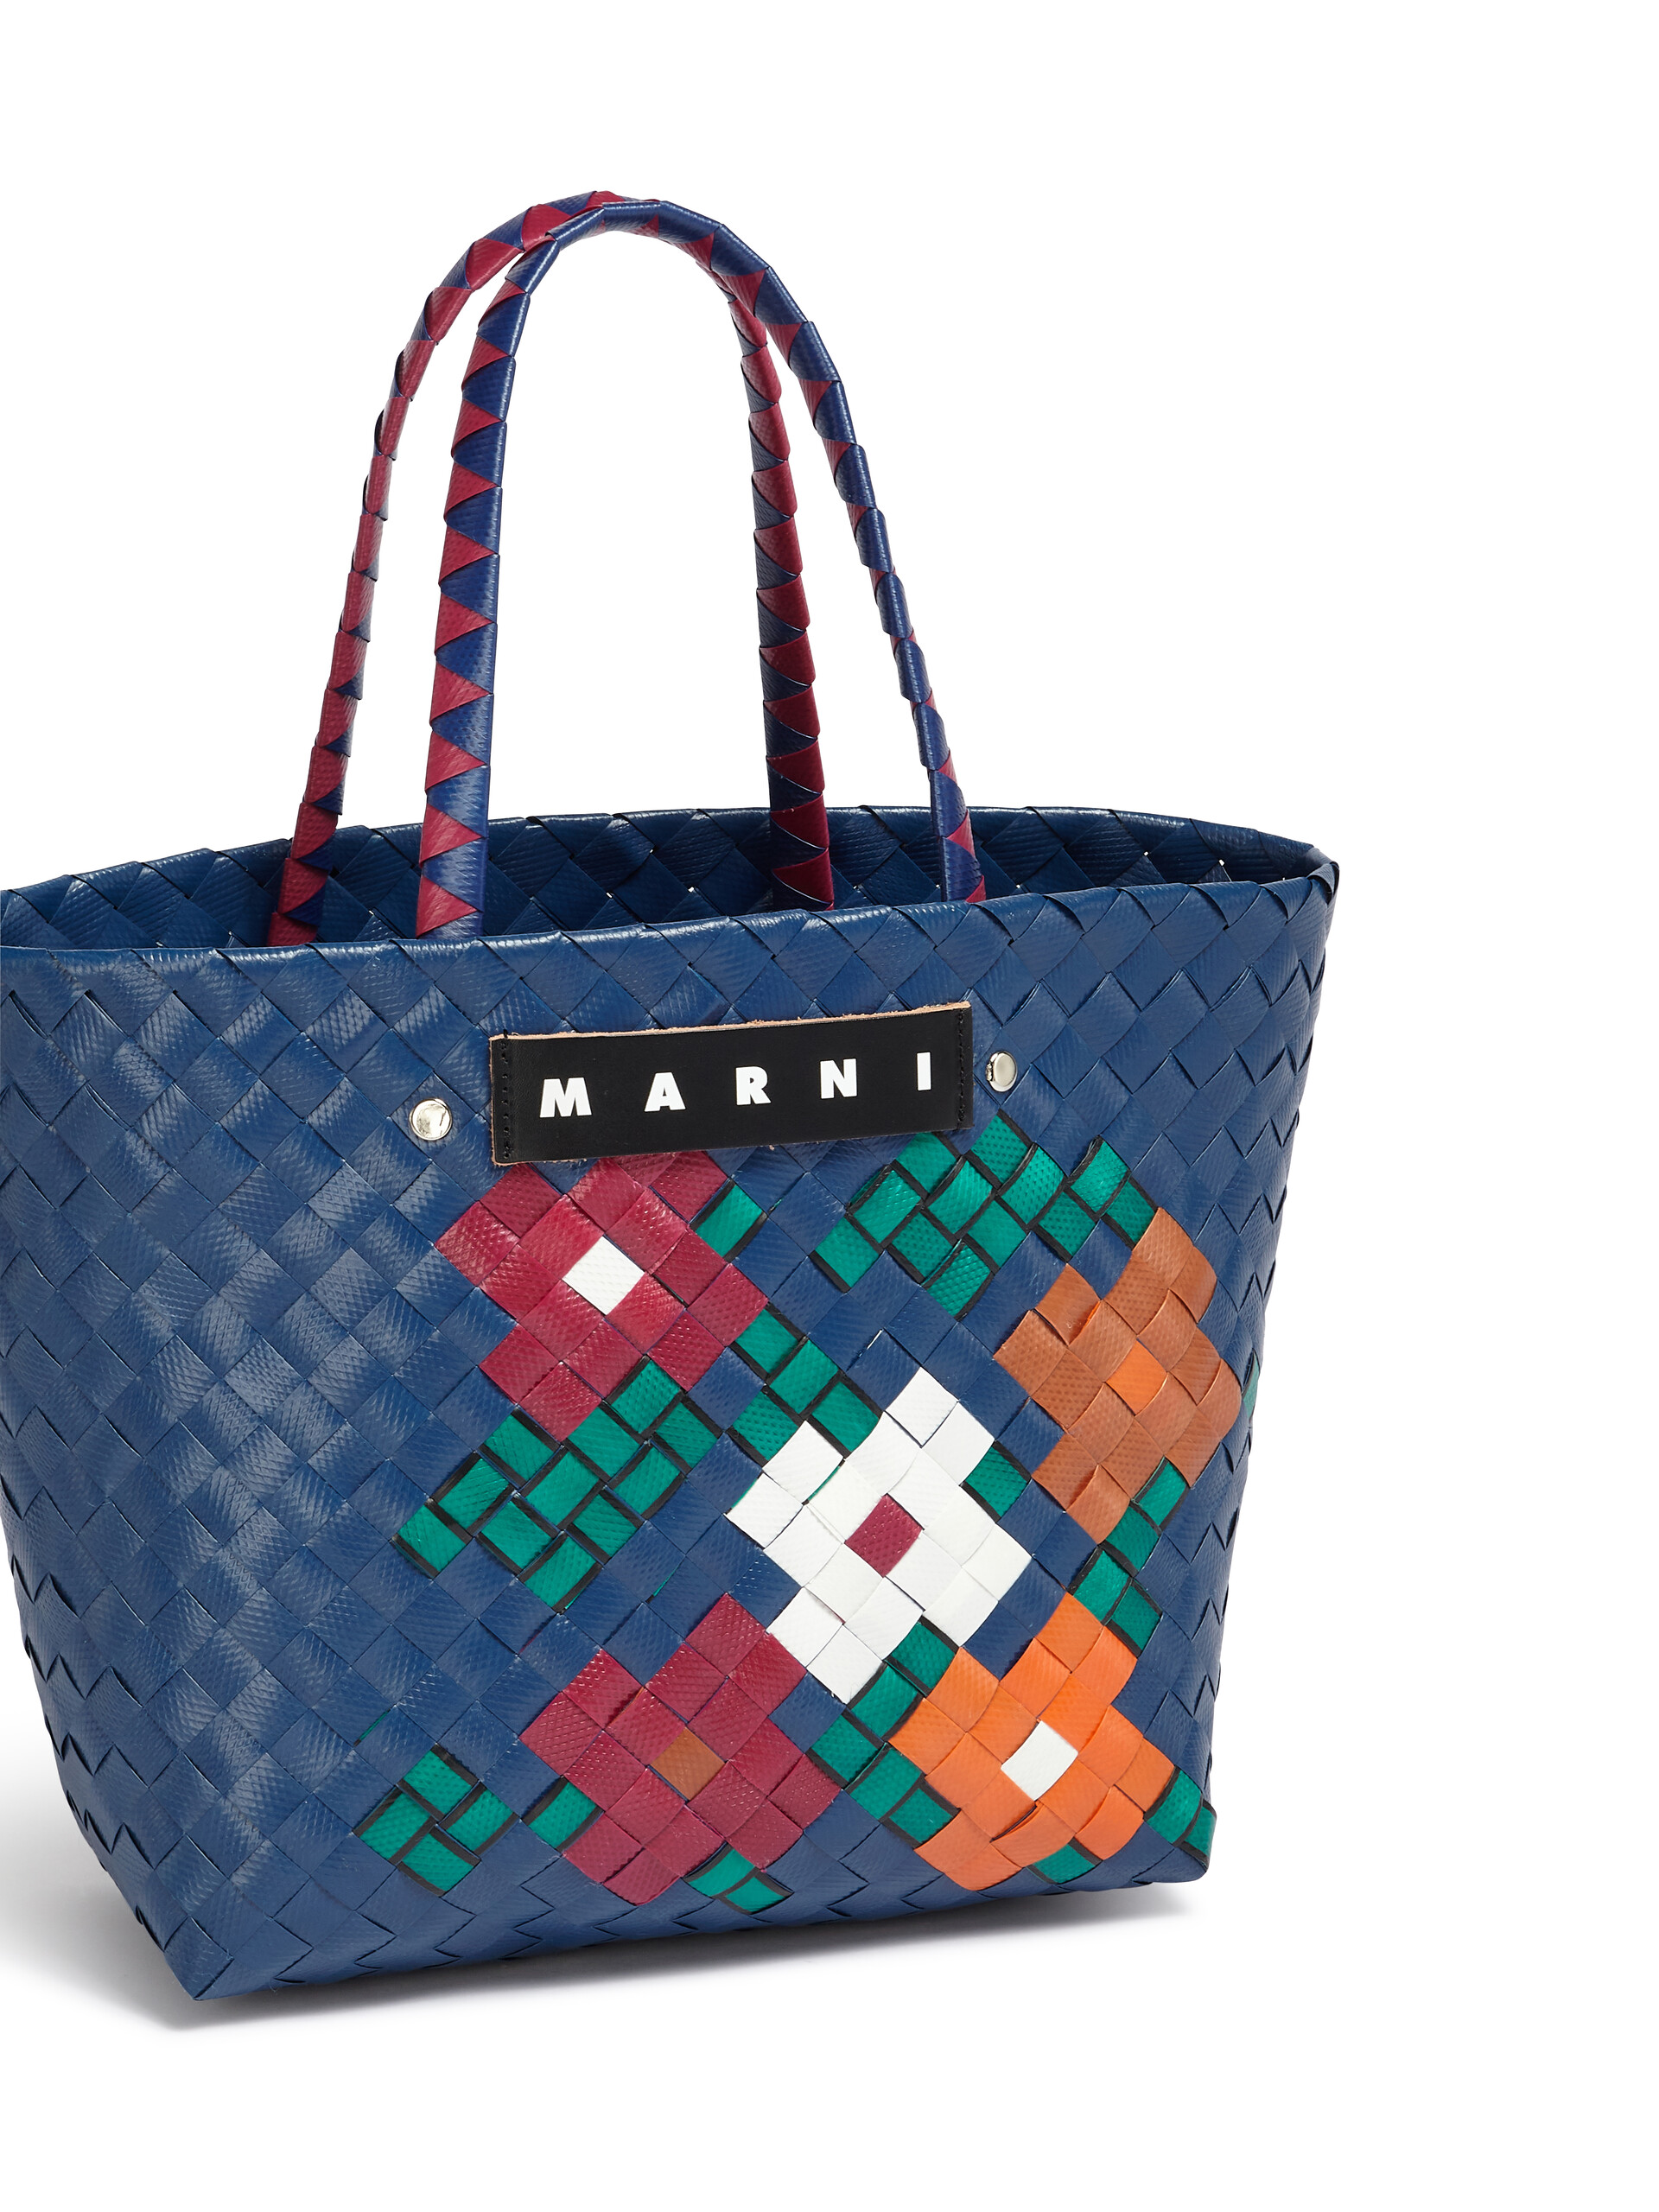 MARNI MARKET small bag in blue flower motif